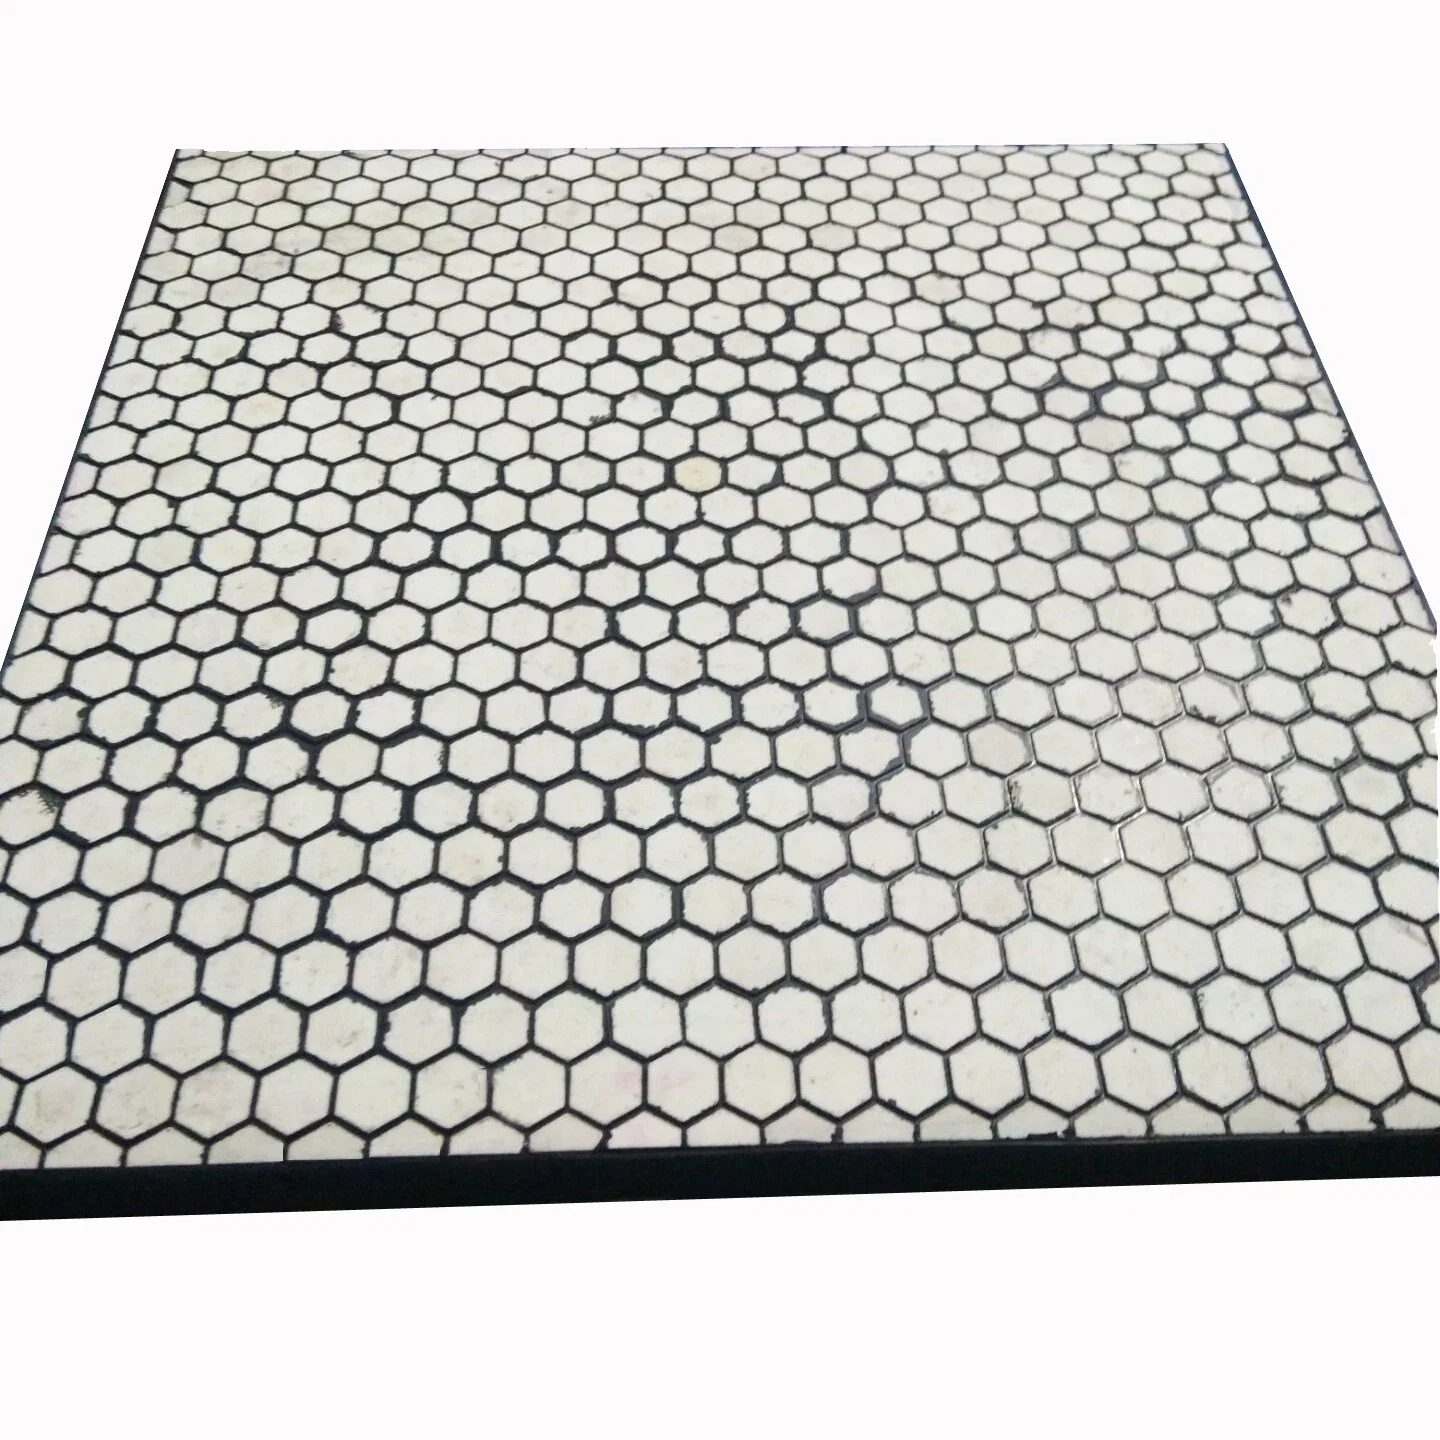 Impact Resistant 99% Alumina Tiles and Zta Ceramic Tiles for Ballistic Applications